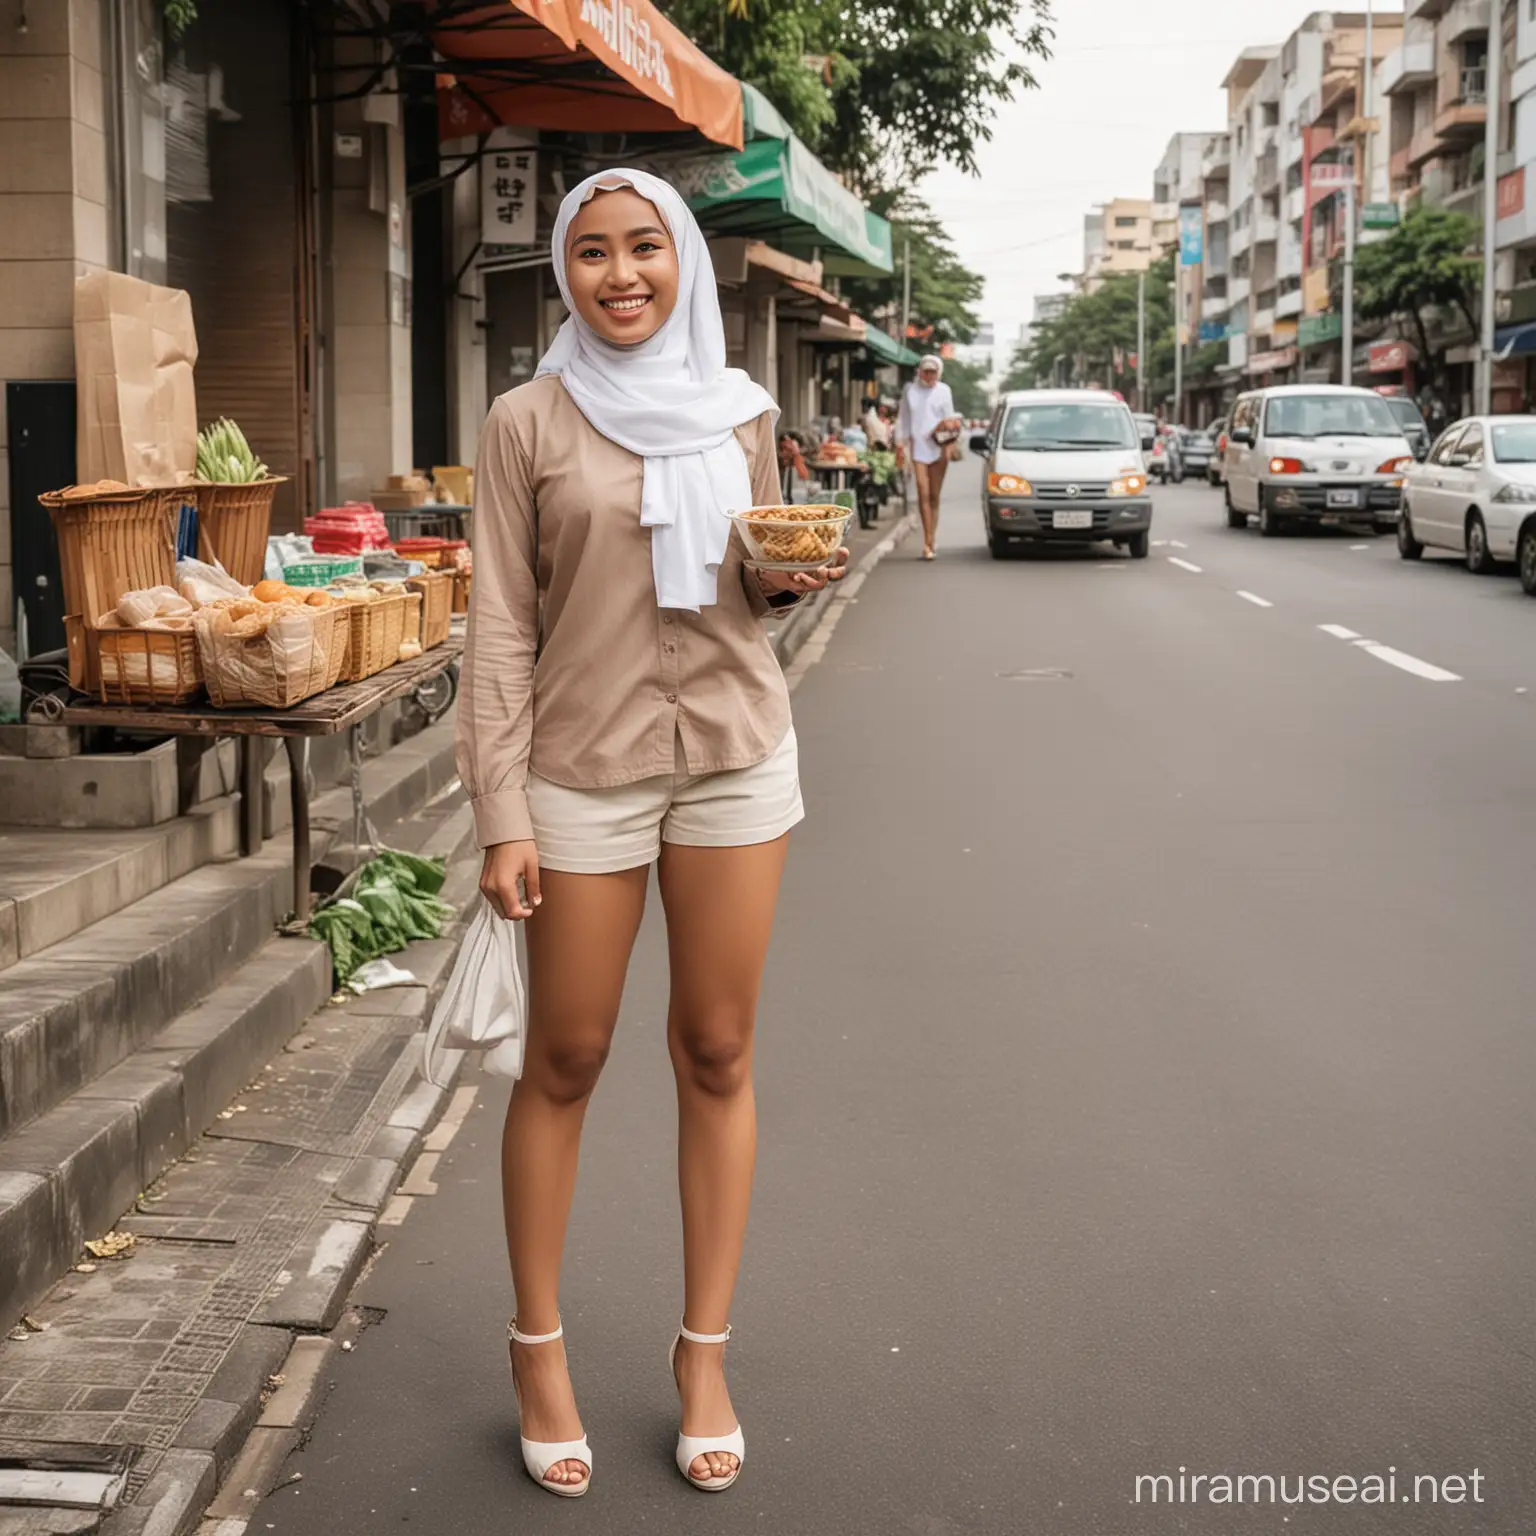 Indonesian Girl in Jakarta Holding White Bowl Beside Smiling Noodle Vendor